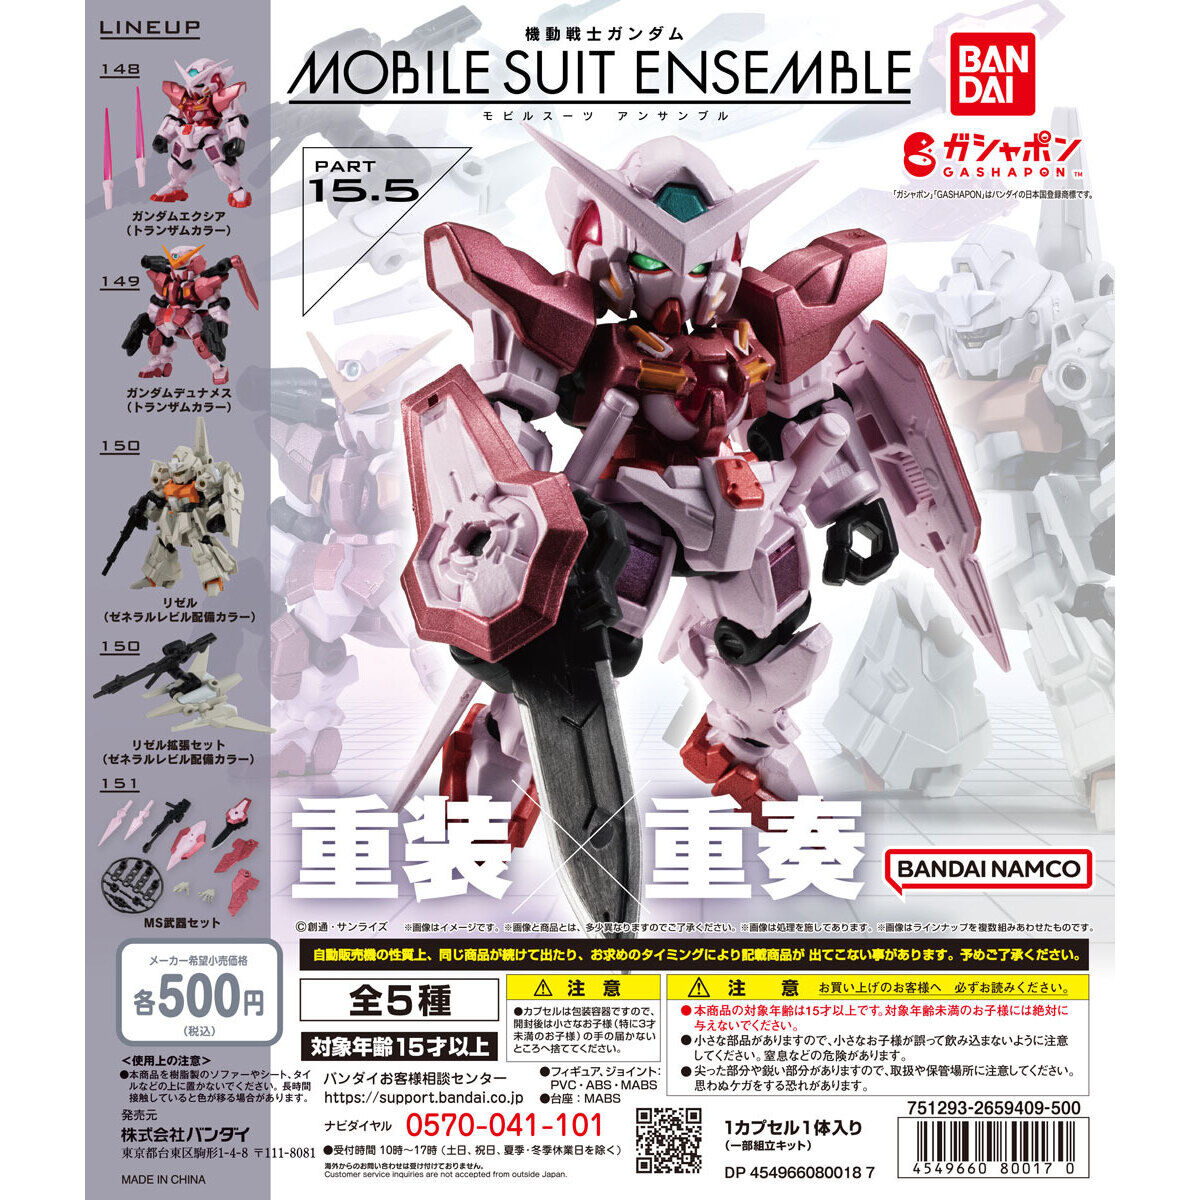 Gashapon Gundam Series: Gundam Mobile Suit Ensemble Part.15.5